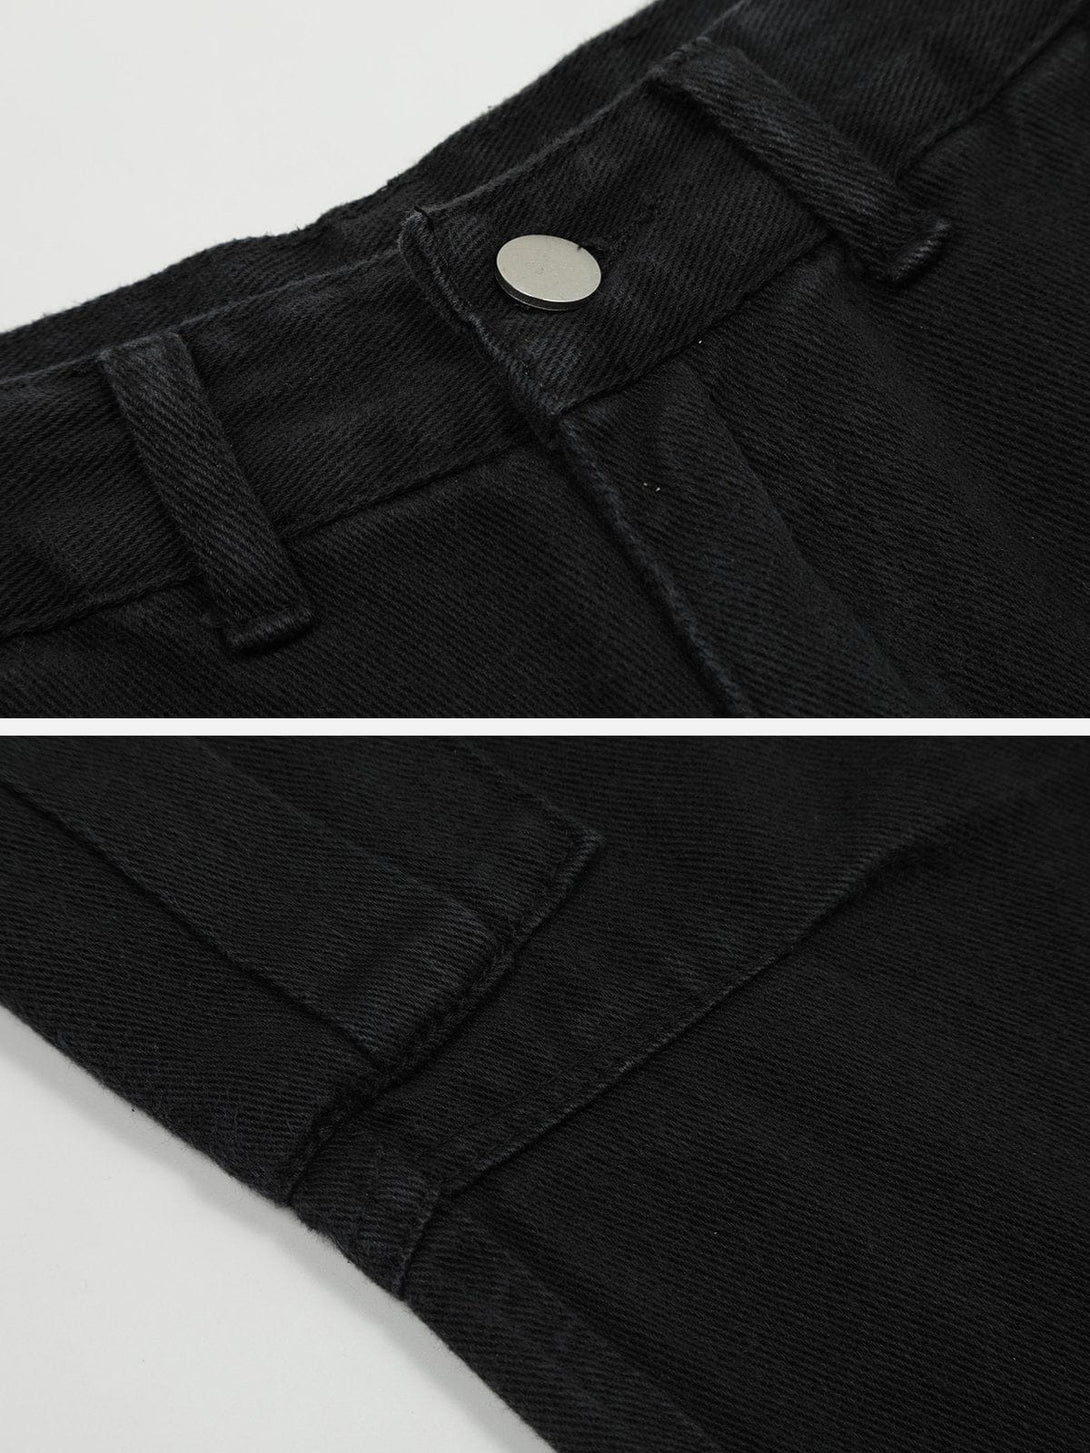 Majesda® - Multi-Pocket Zip Pants outfit ideas streetwear fashion